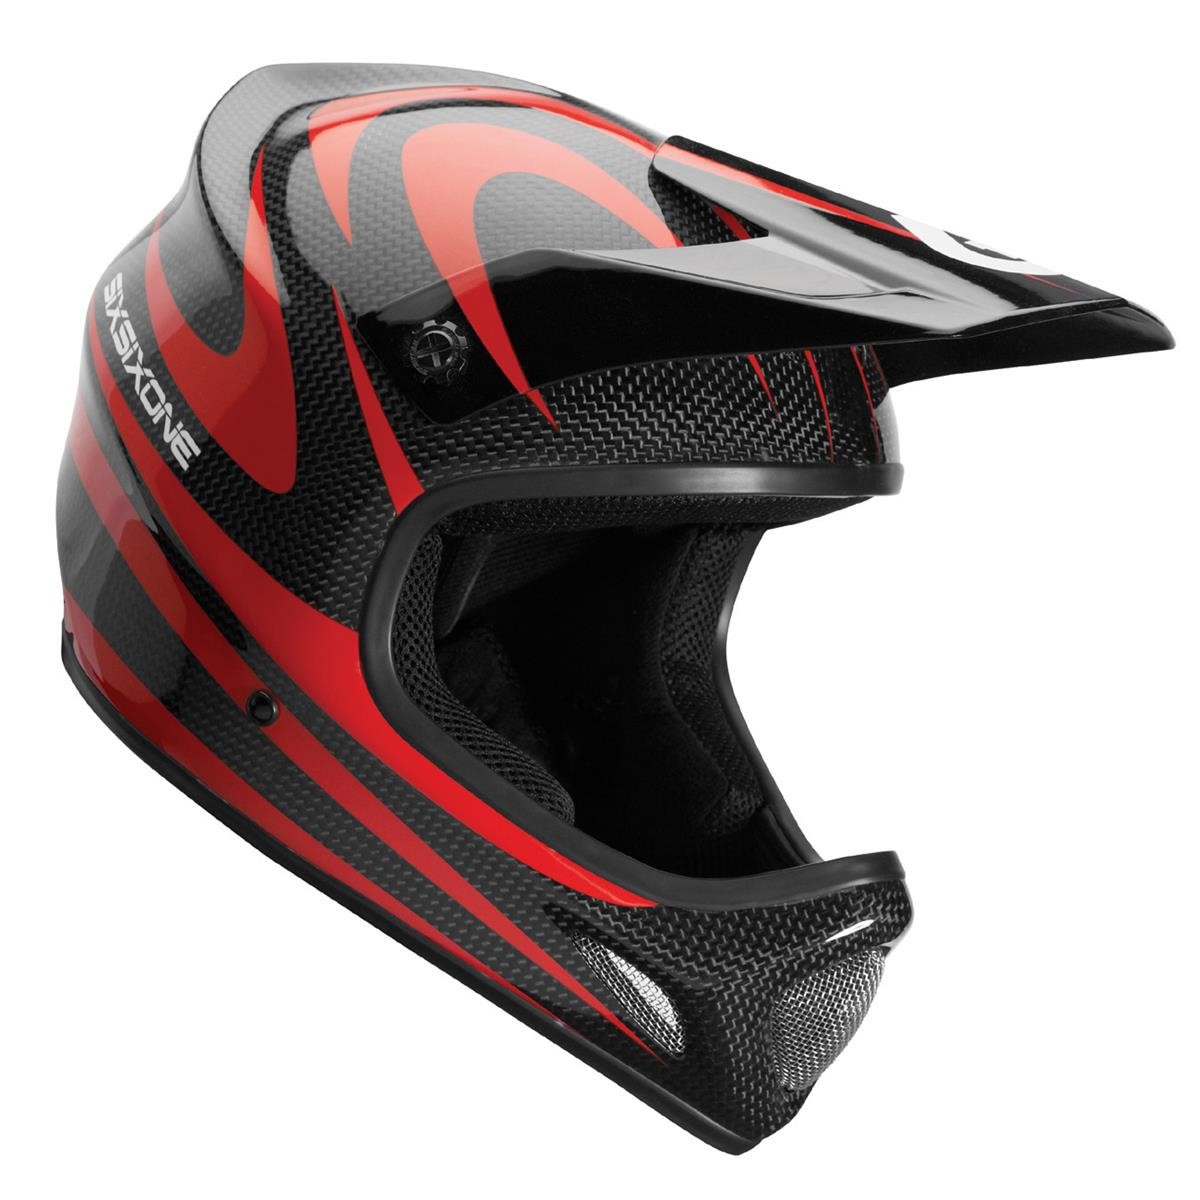 SixSixOne Downhill-MTB Helmet 661 Evo Carbon Camber Red